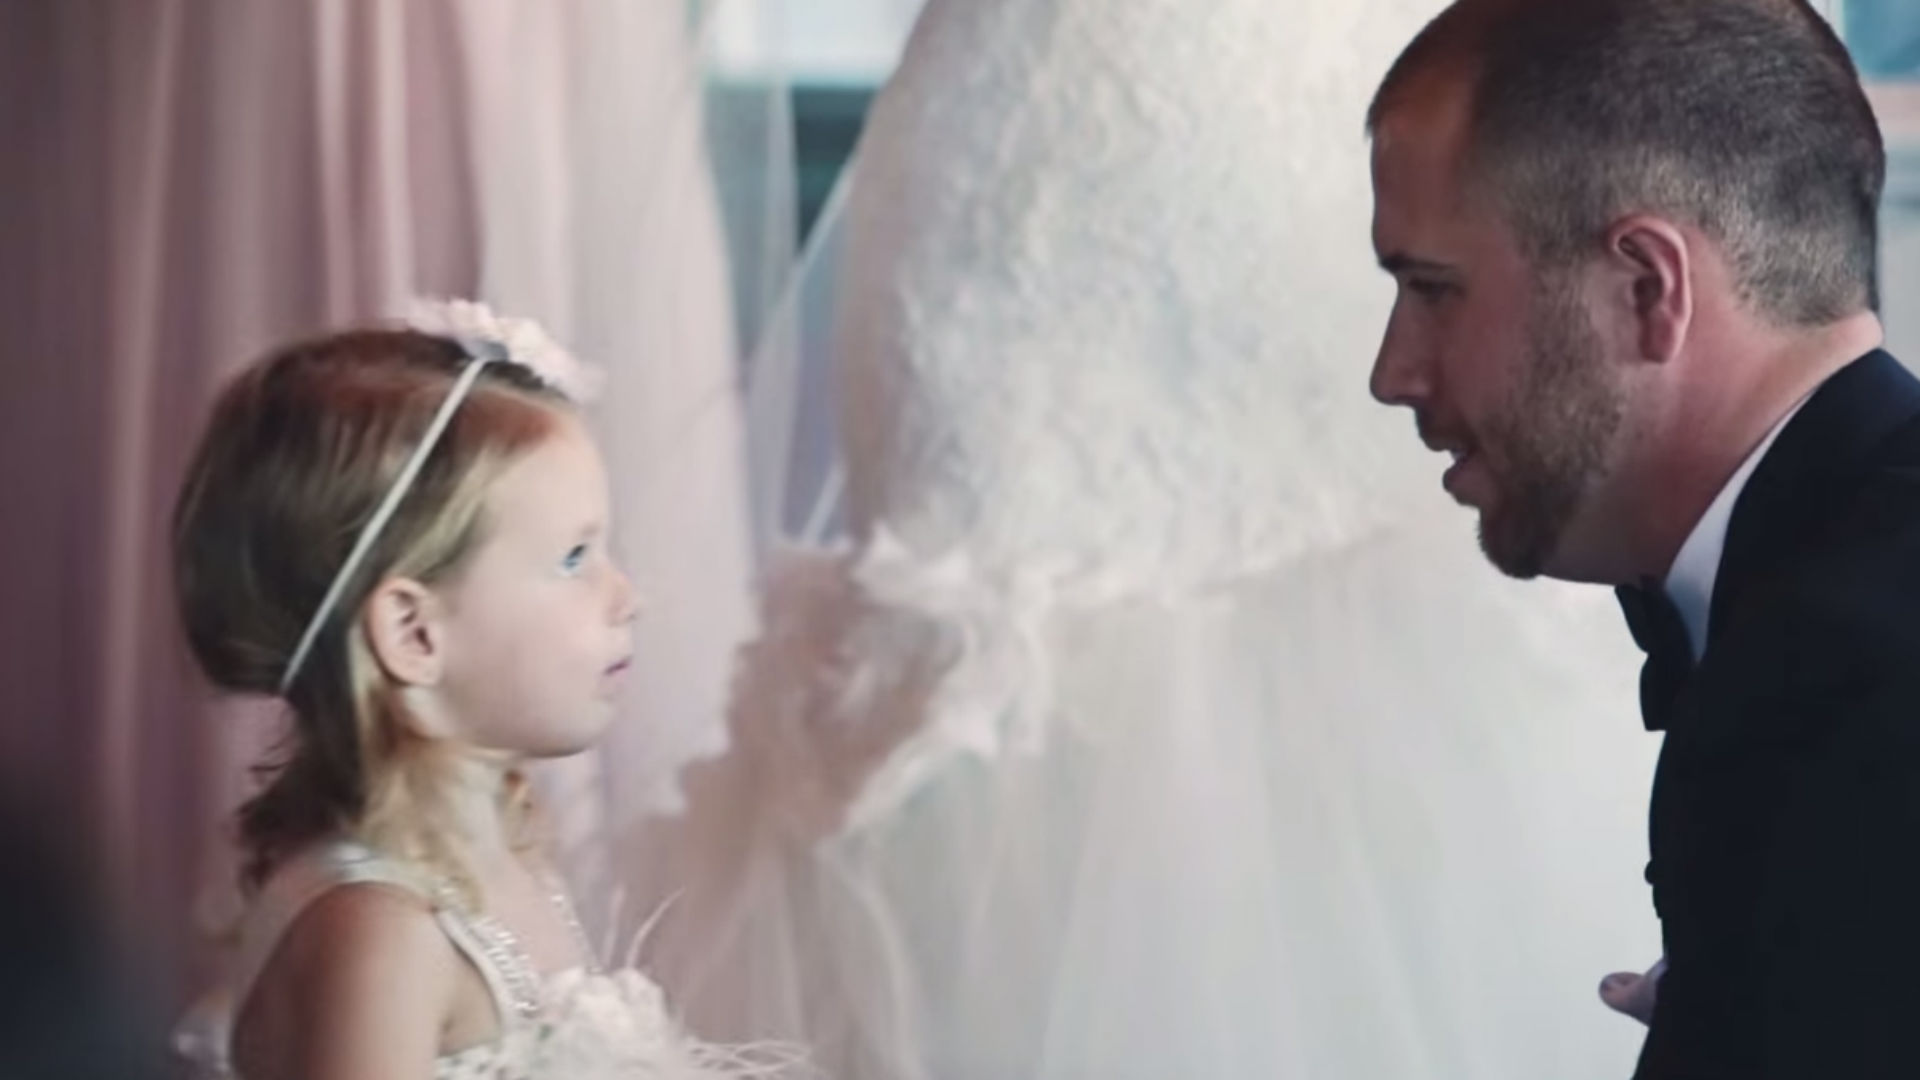 Brian Scott's vows to 3yearold stepdaughter will make